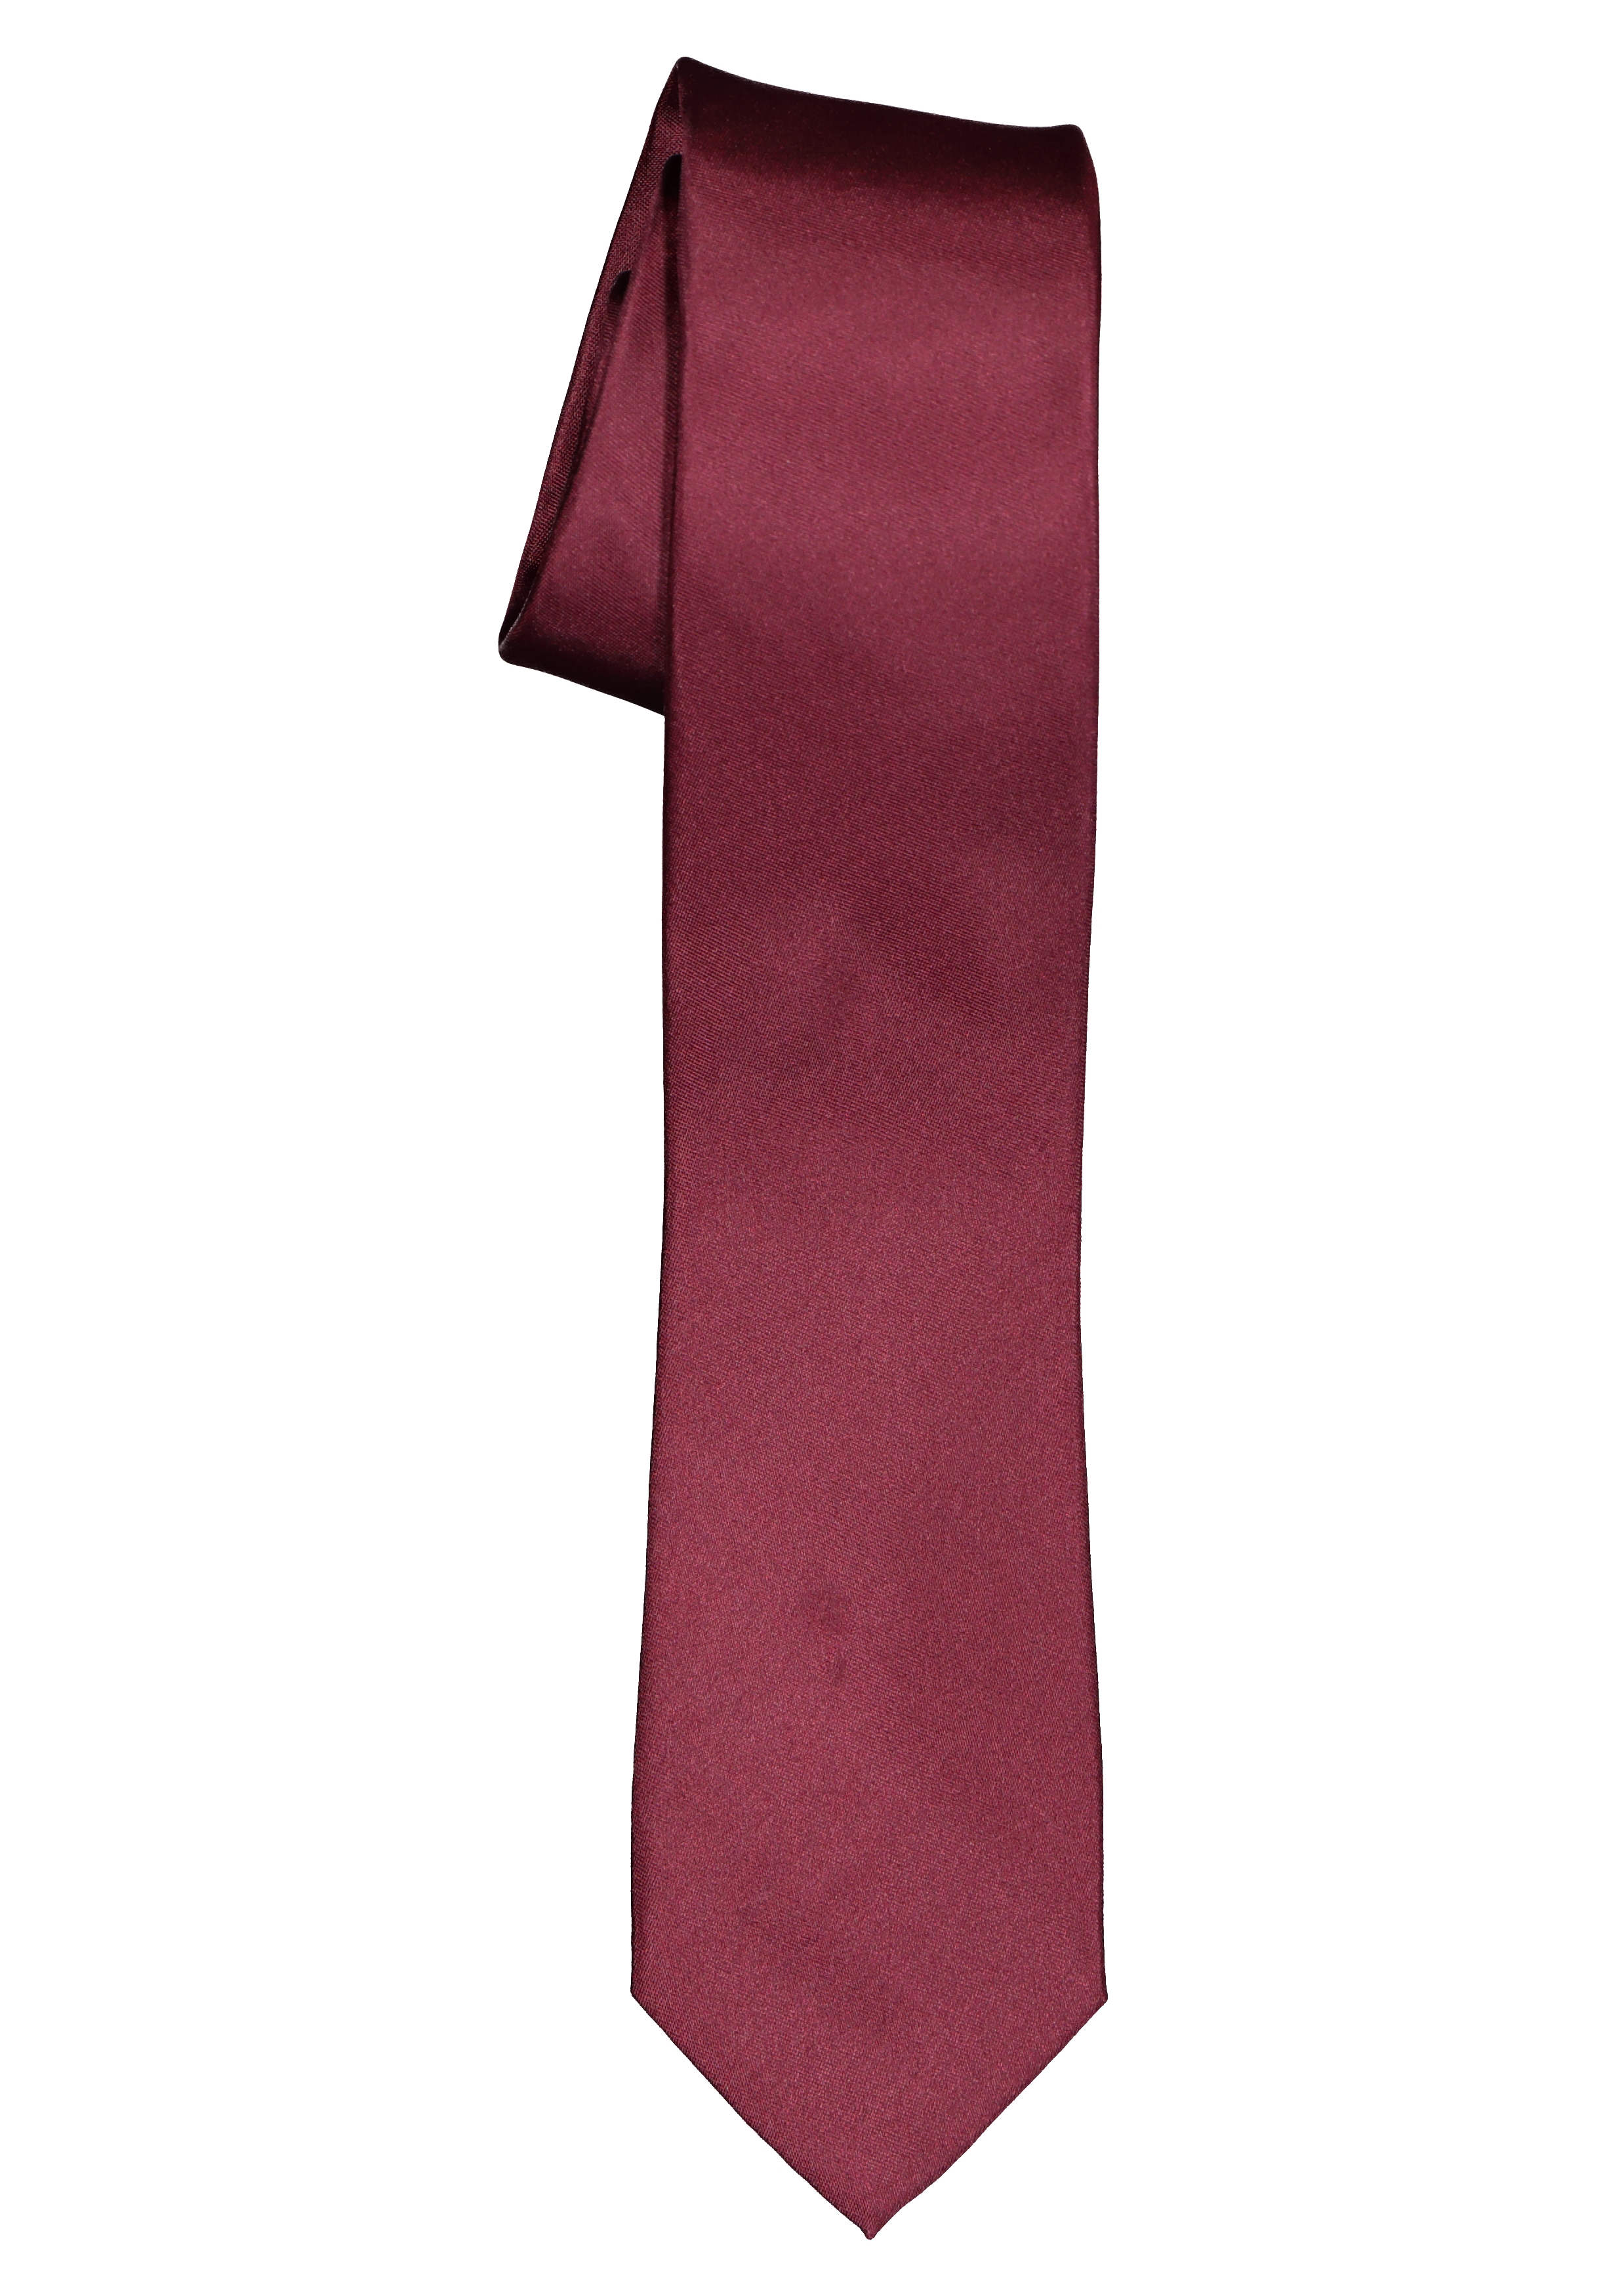 ETERNA smalle stropdas, bordeaux rood